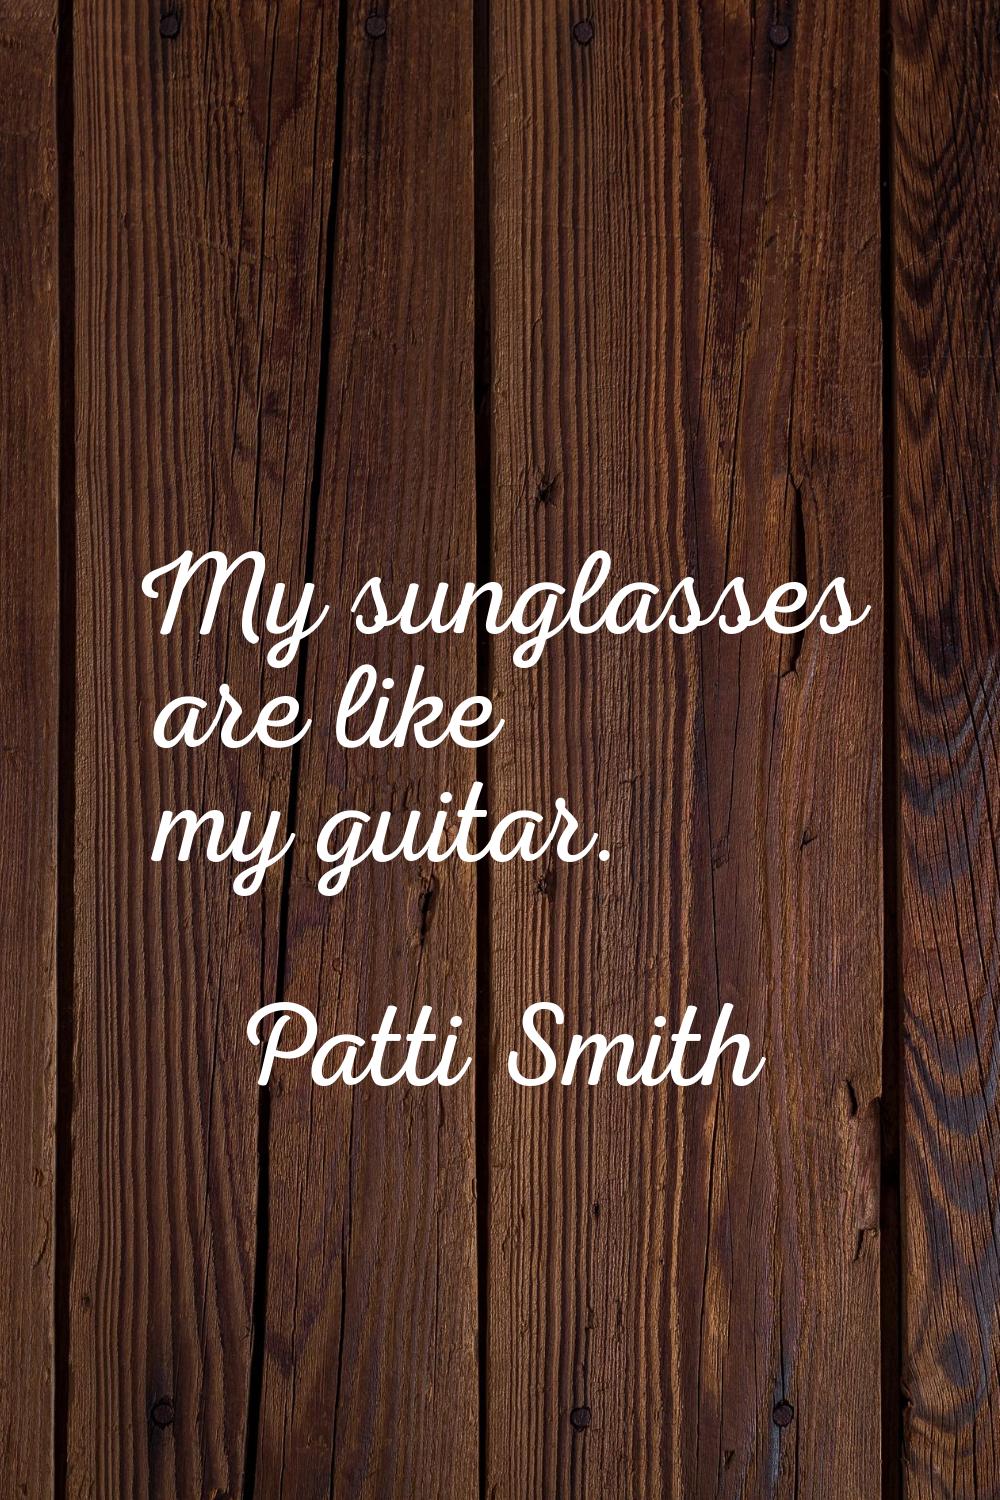 My sunglasses are like my guitar.